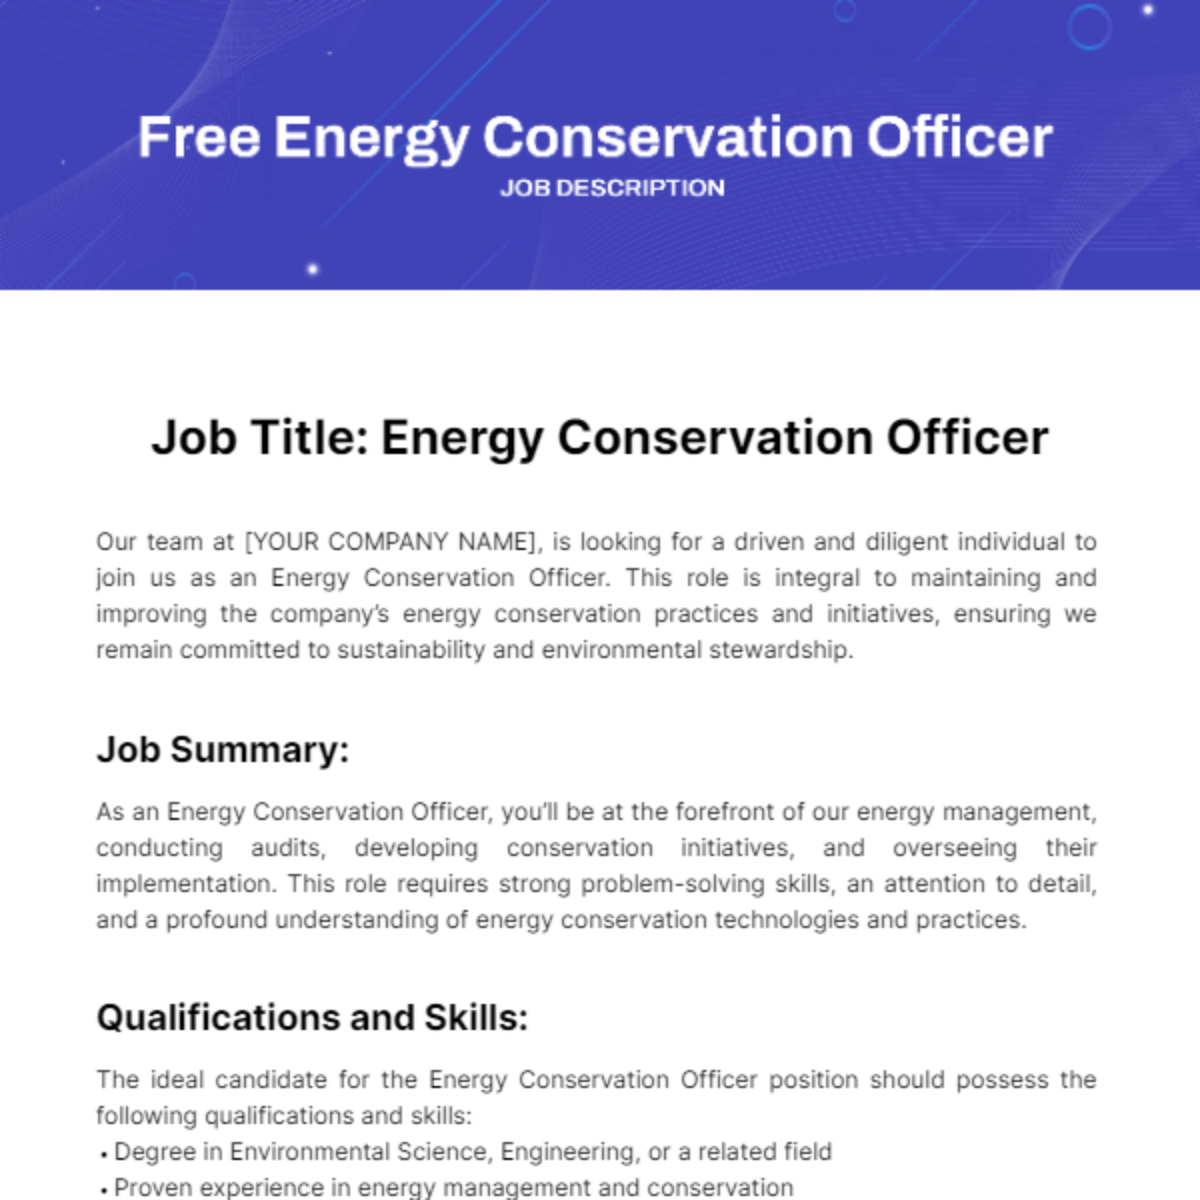 Energy Conservation Officer Job Description Template